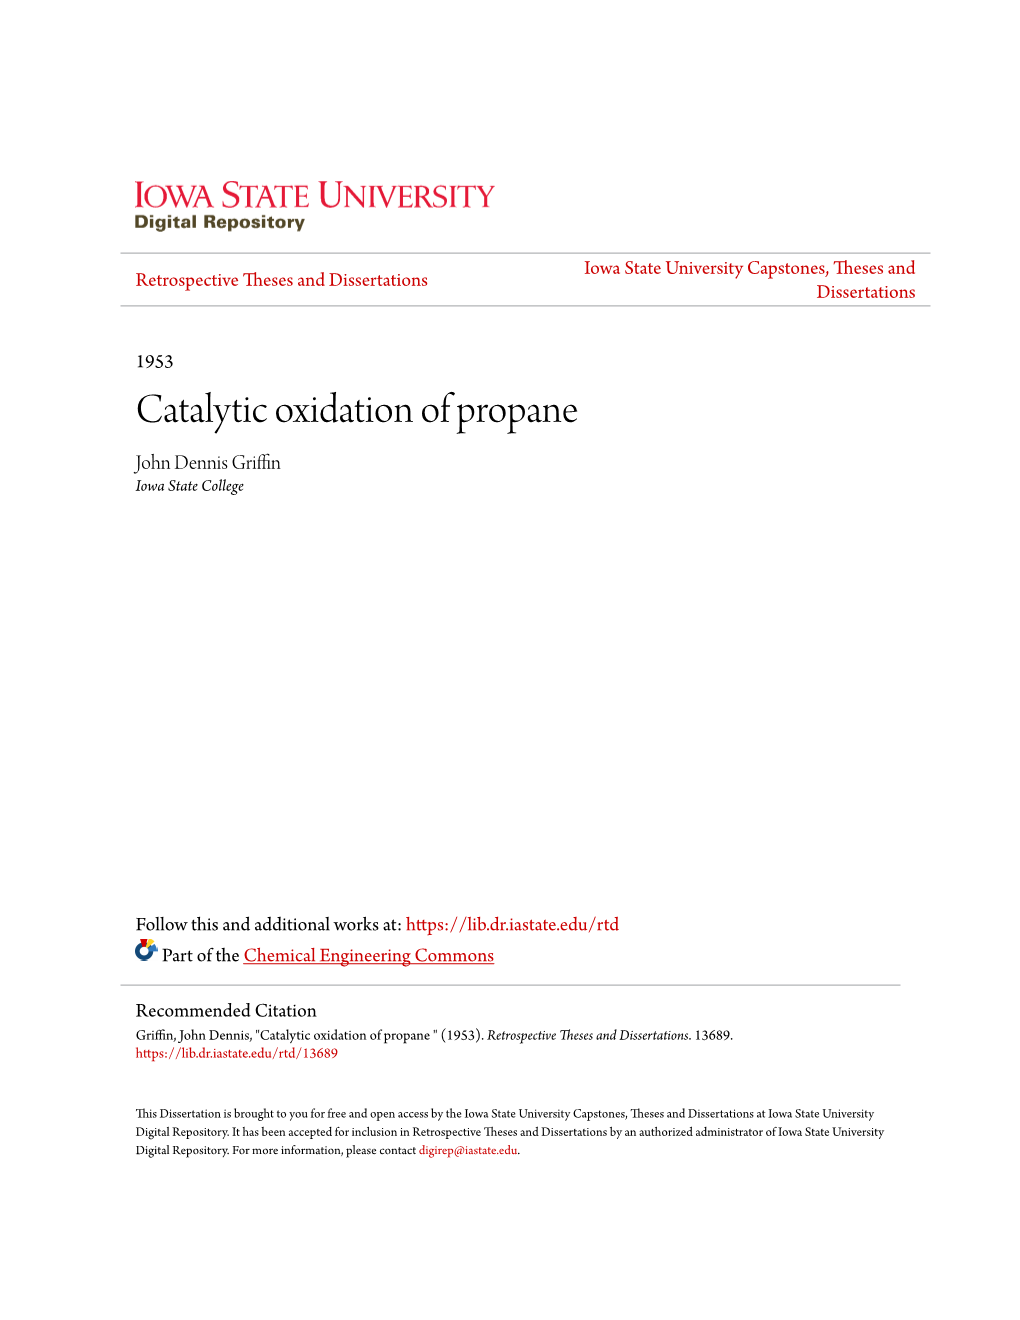 Catalytic Oxidation of Propane John Dennis Griffin Iowa State College